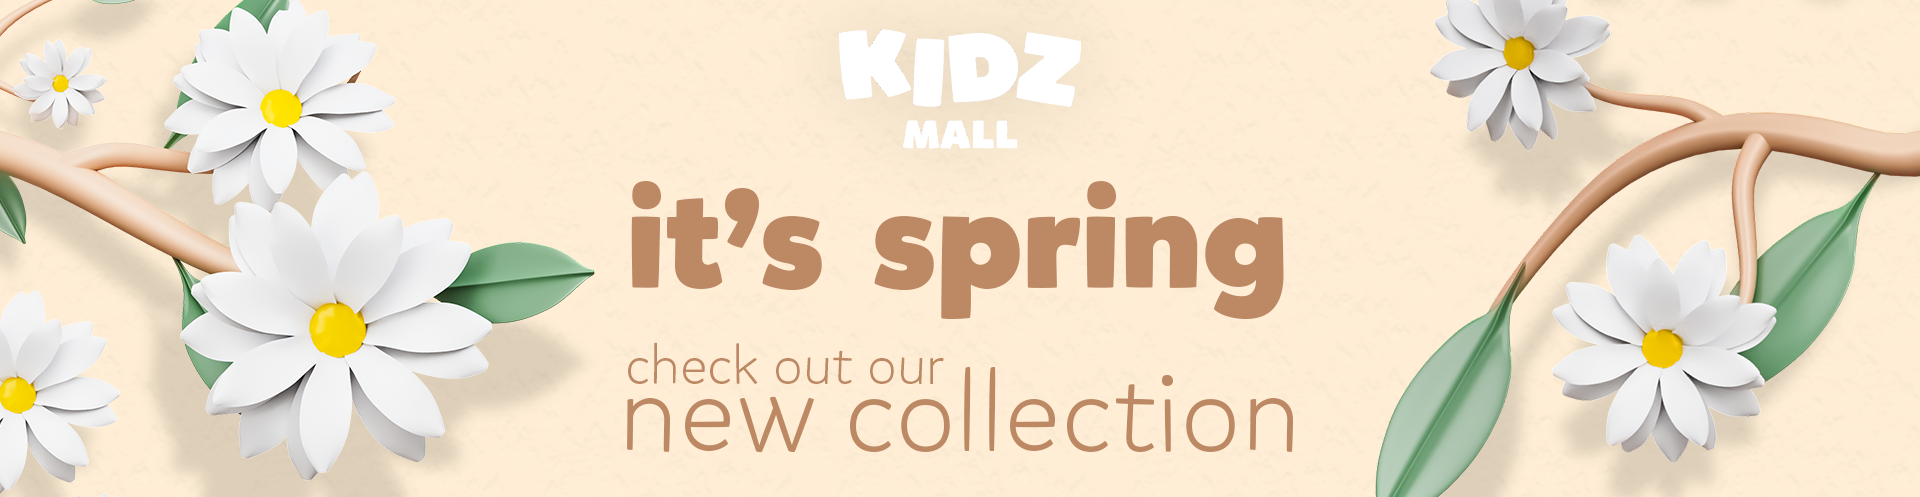 Spring Kidz Mall